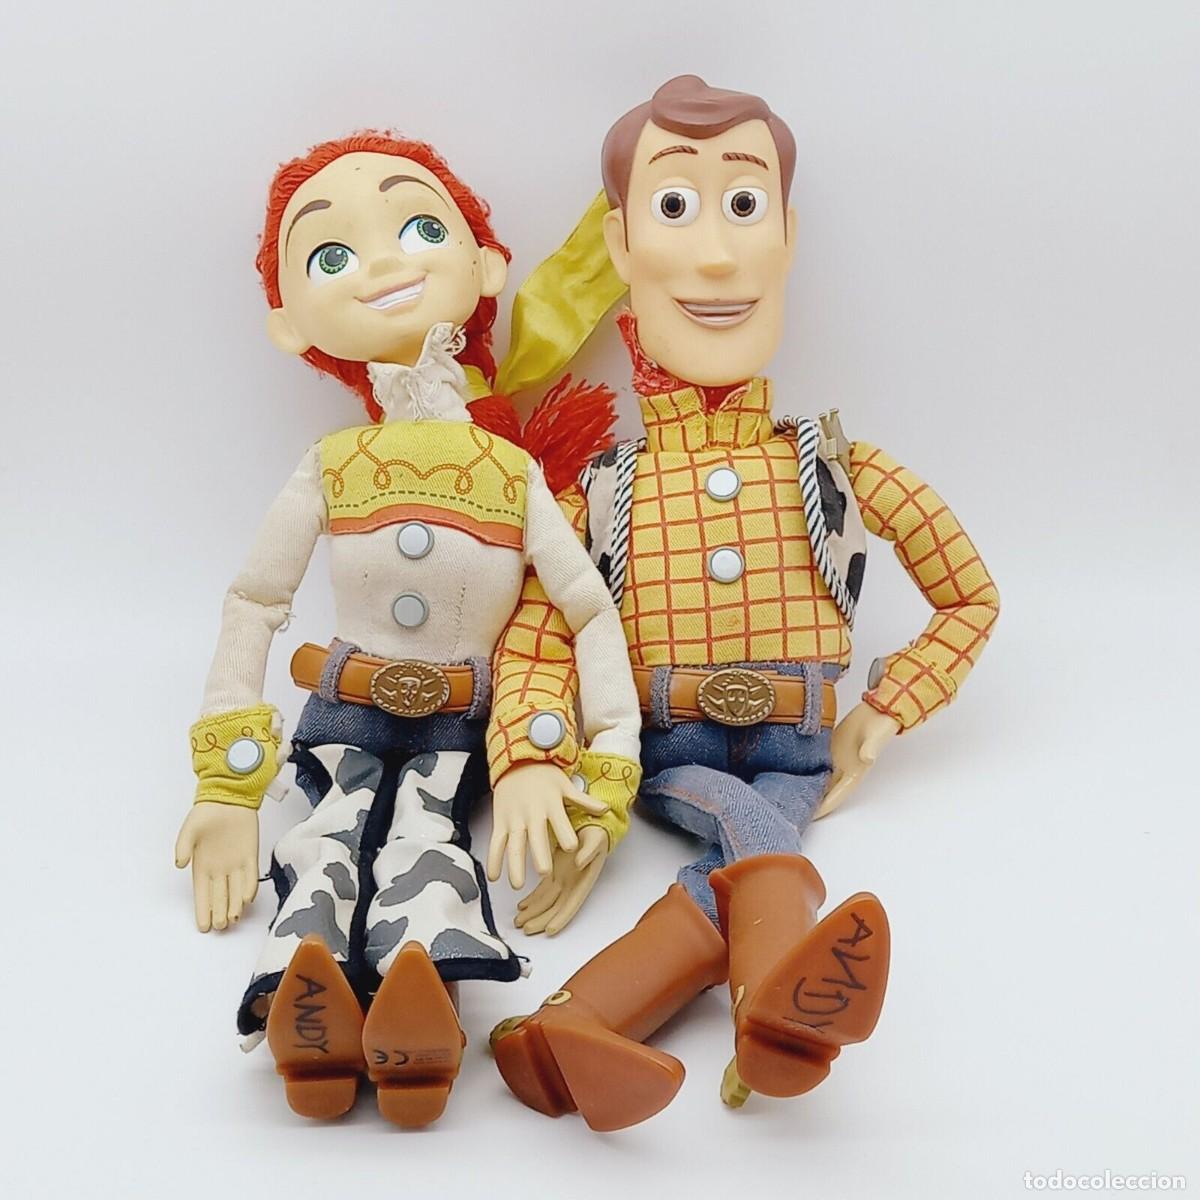 Figurine Woody parlant 30 cm Version française